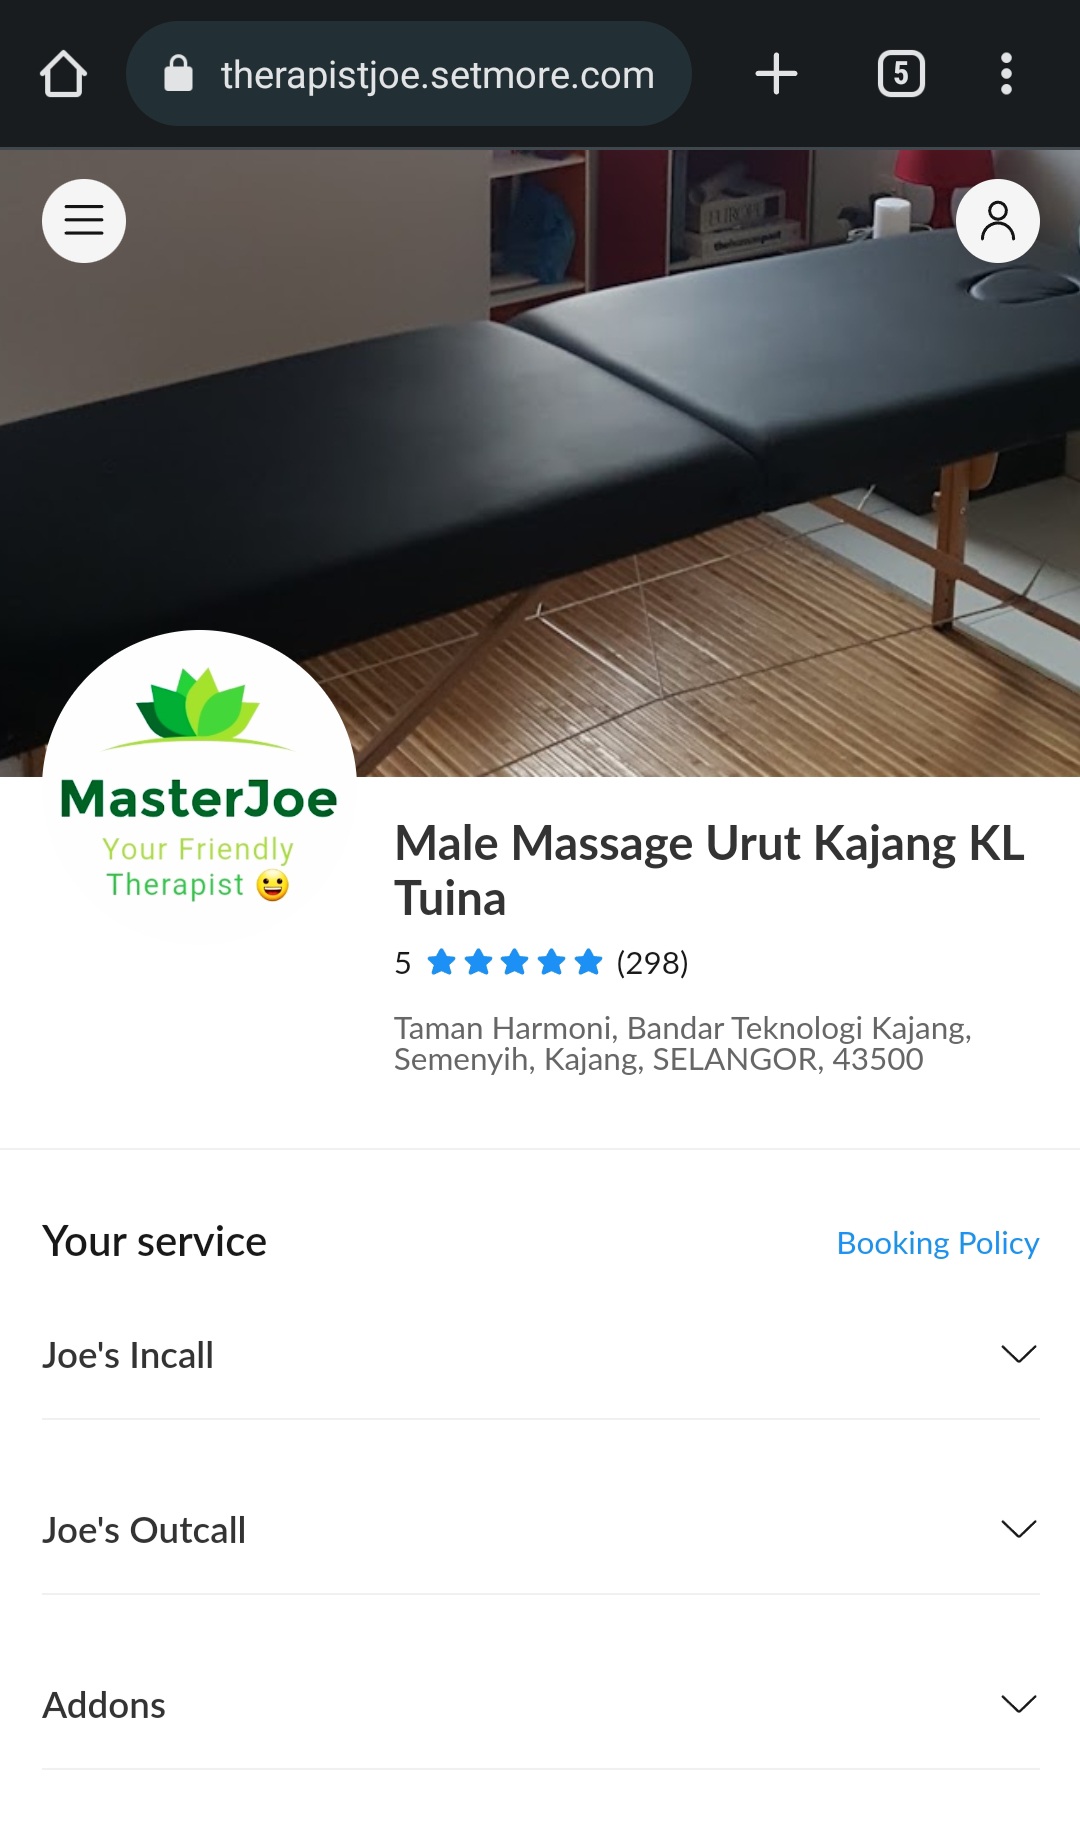 Joe Male Massage KL 男按摩师傅 Urut Lelaki Kajang ð²ð¾ (@Joemaster85) / Twitter